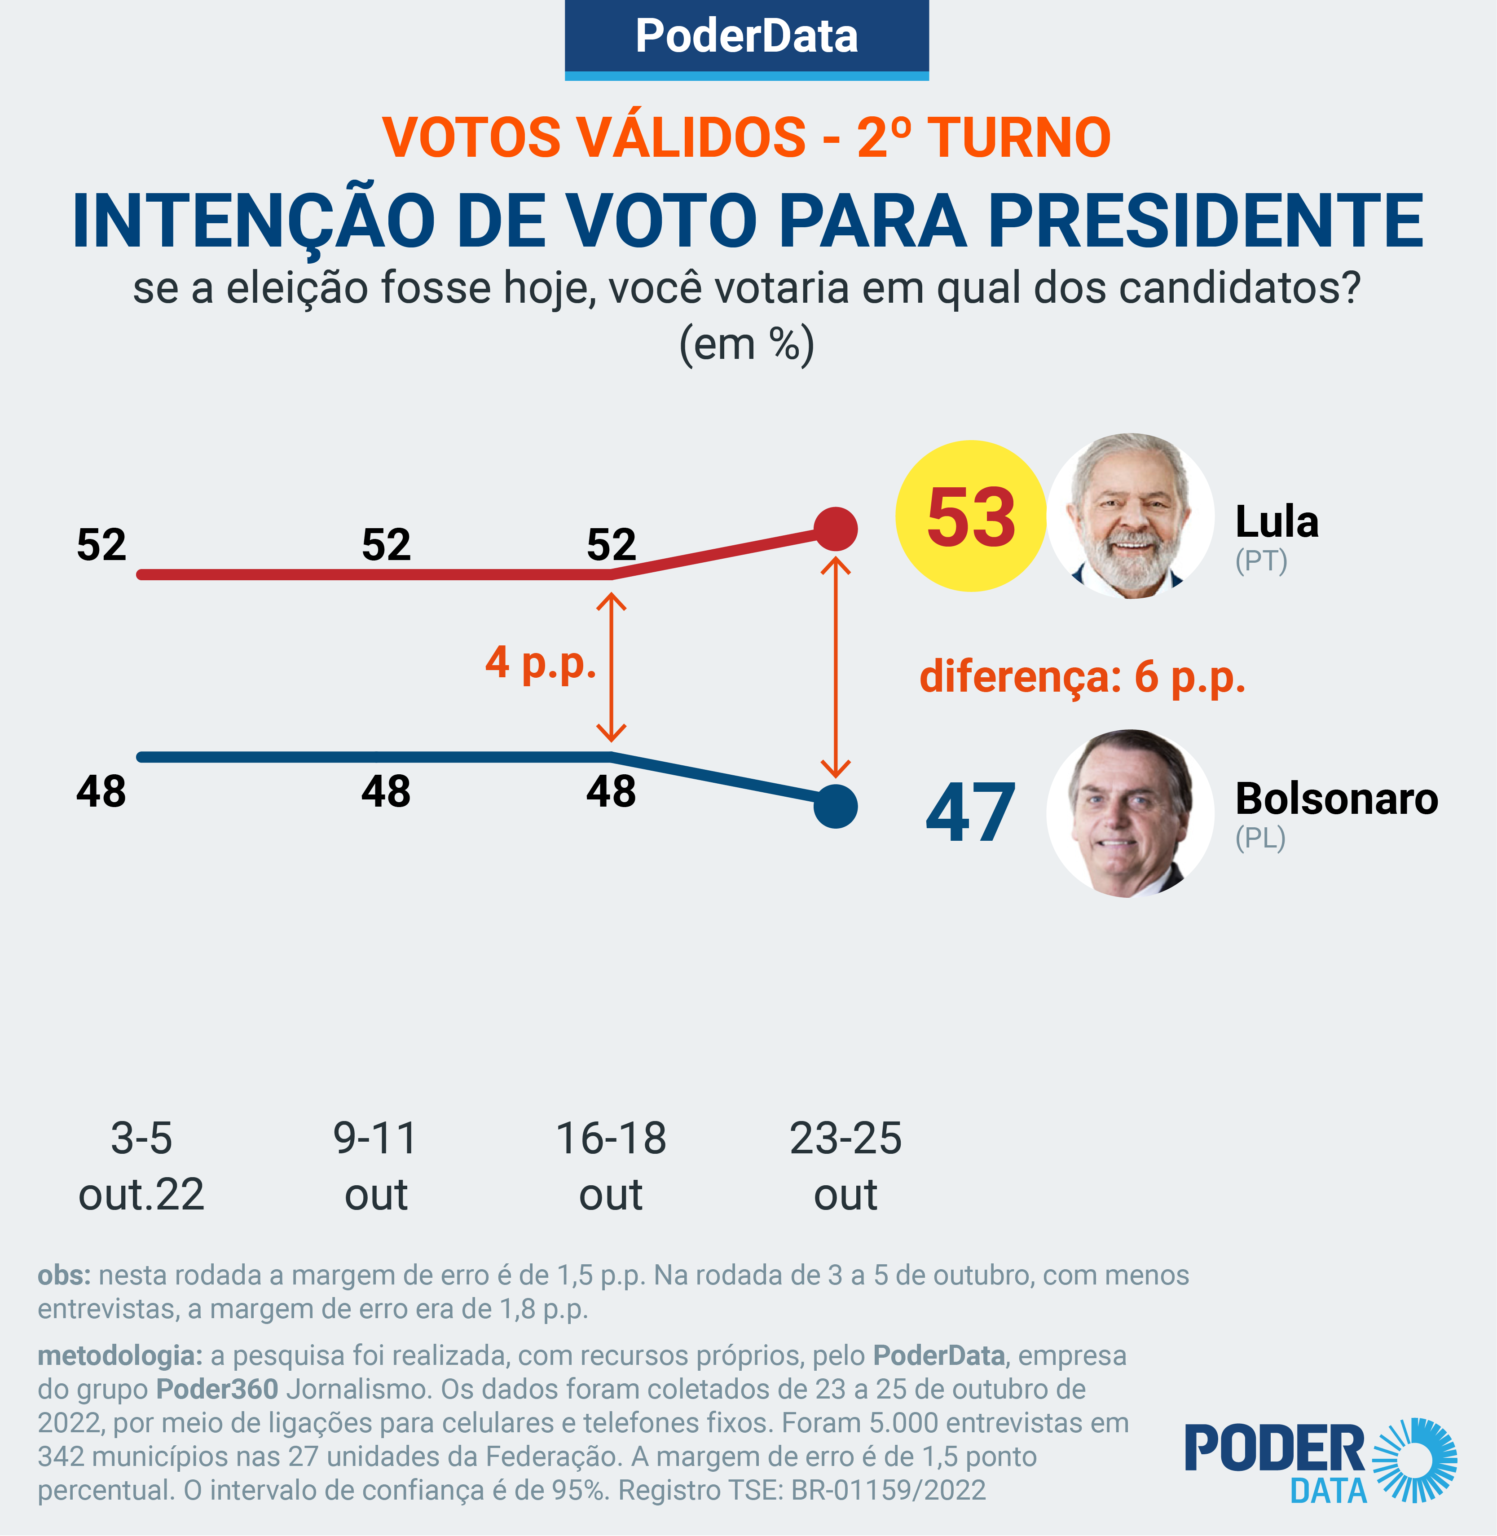 pd-intencao-presidente-25-out-2022-02-1497x1536-1 Lula 53% X 47% Bolsonaro, diz PoderData